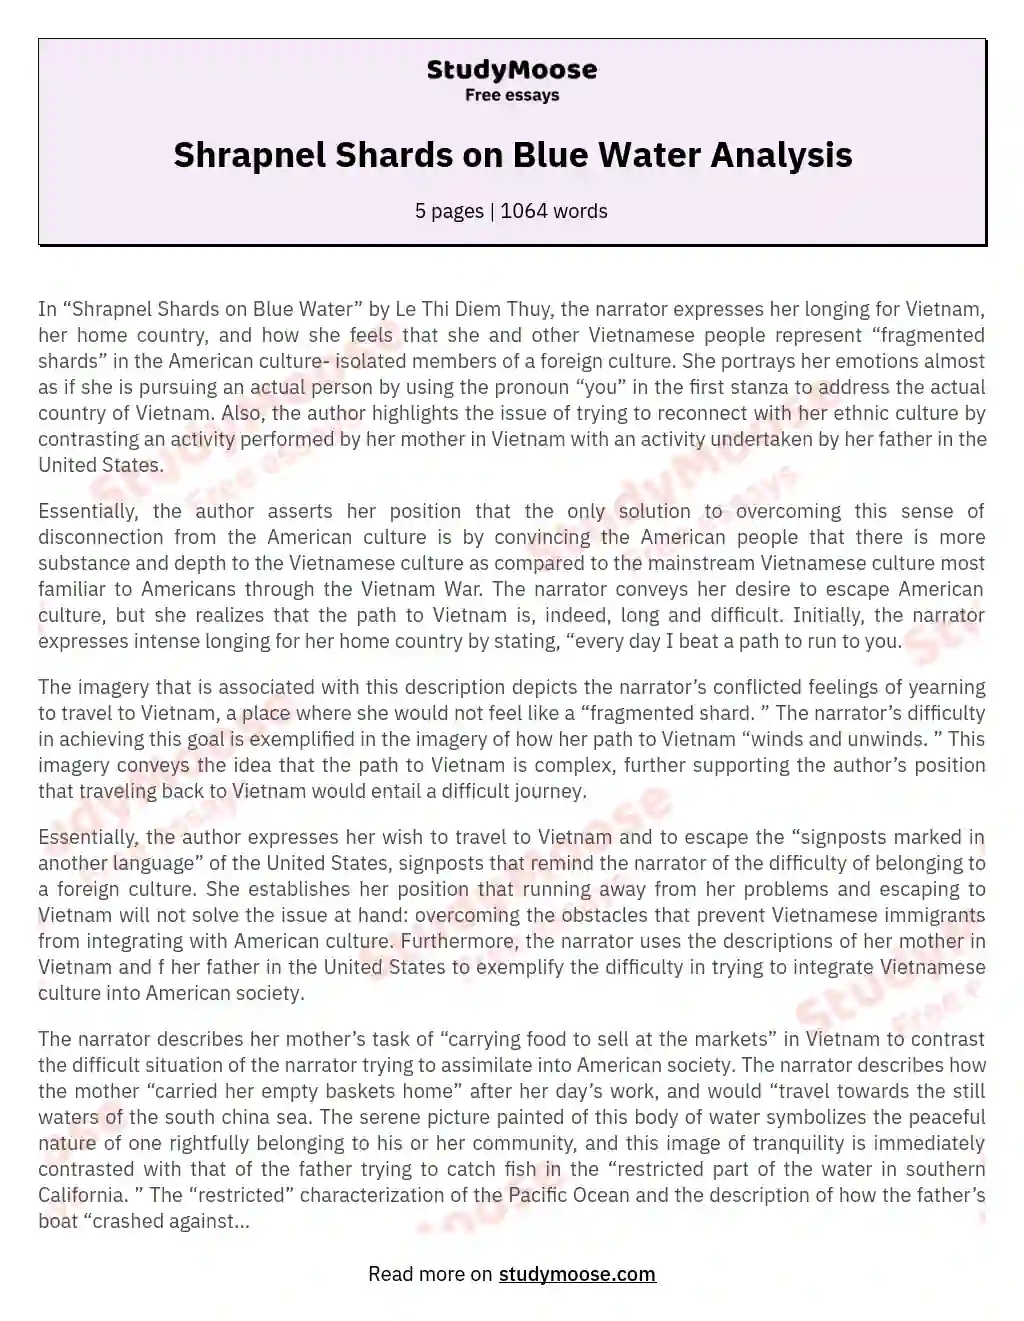 Shrapnel Shards on Blue Water Analysis essay